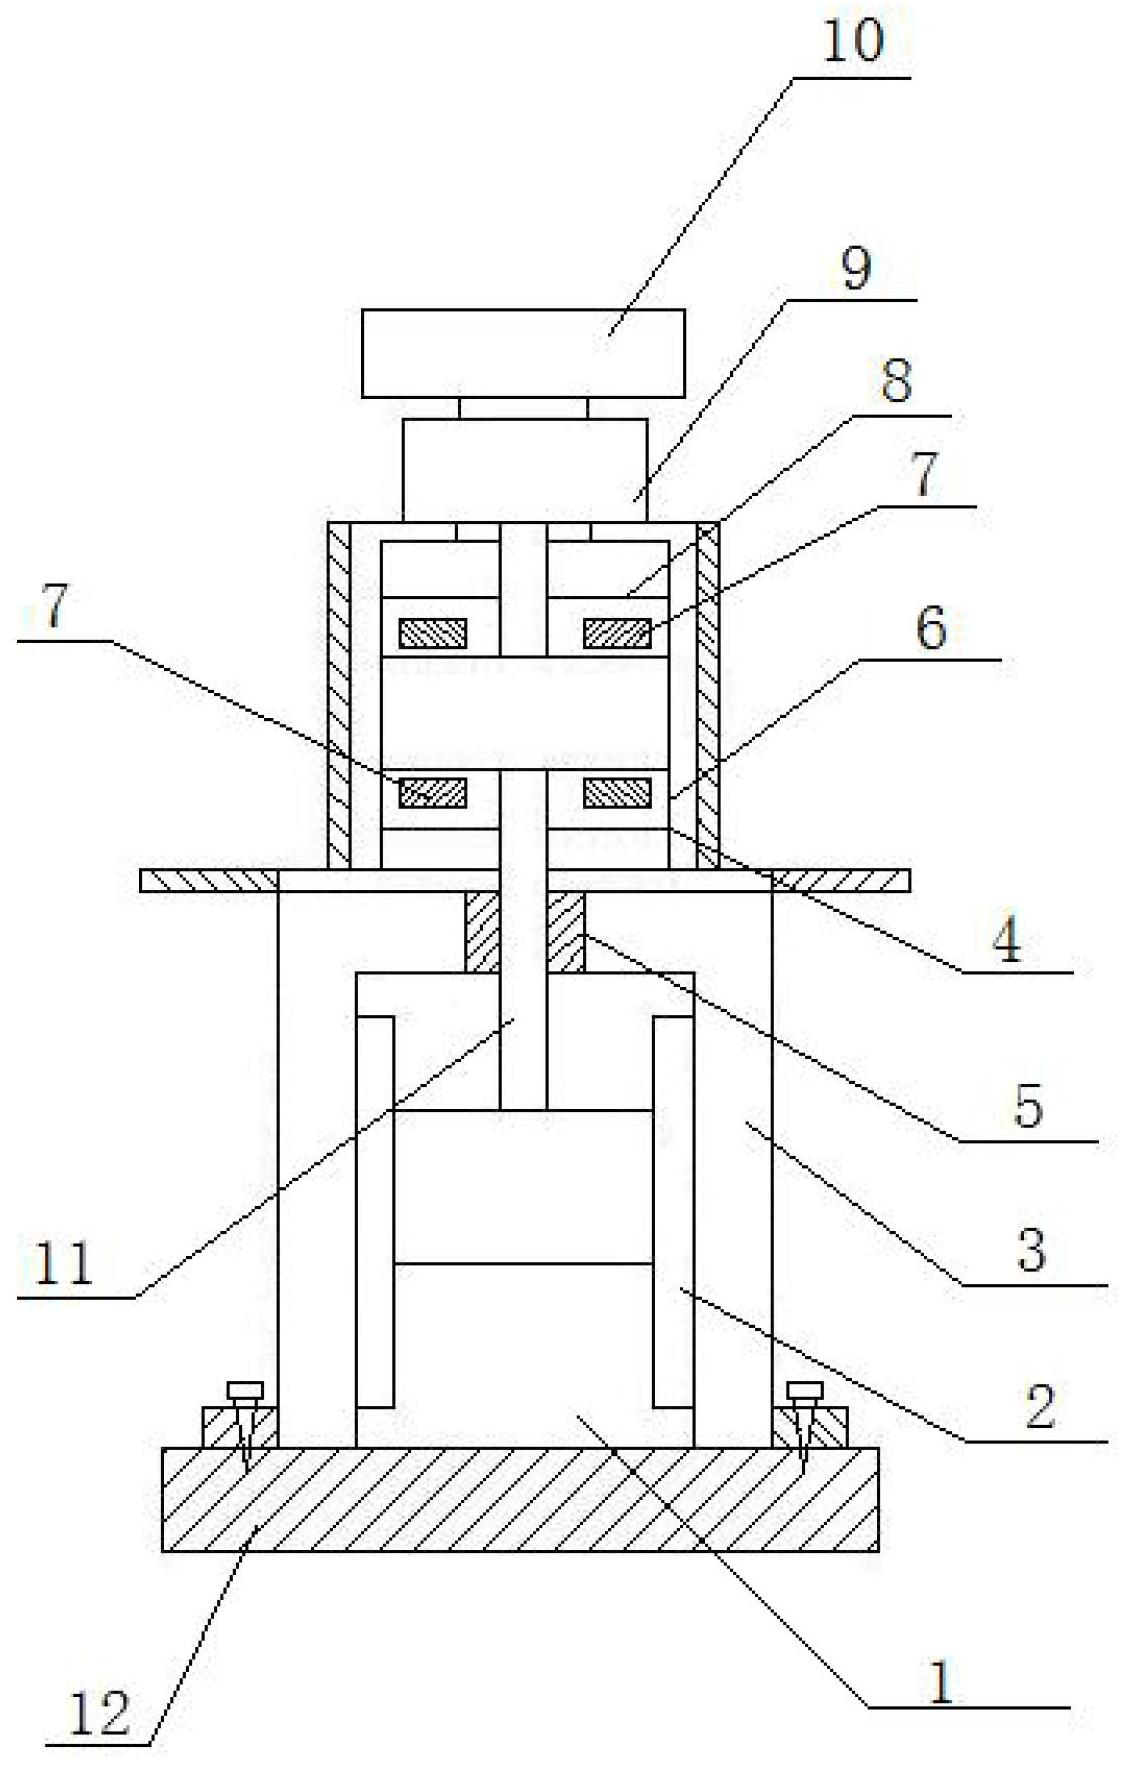 Guide rail and sliding block transmission mechanism for forging